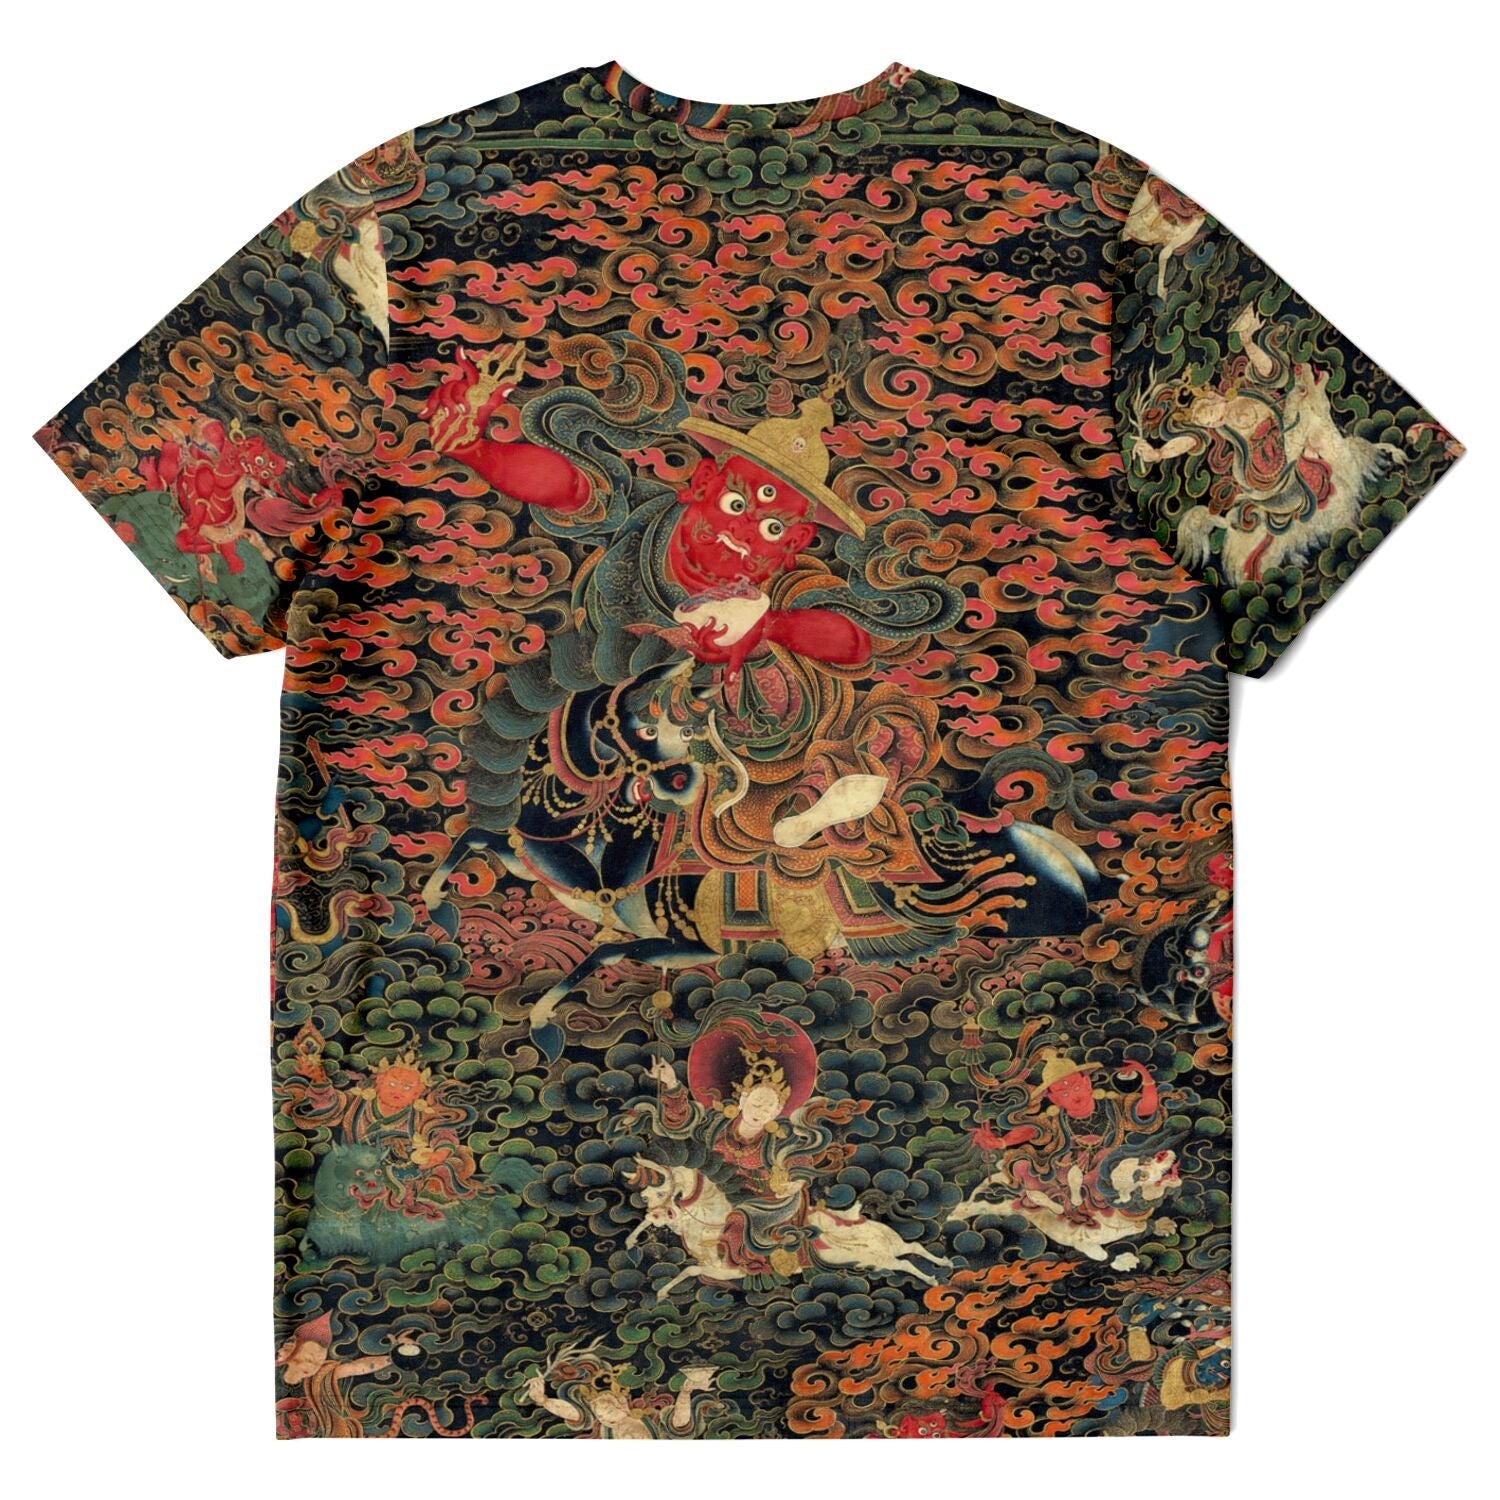 T-shirt Pehar: Tibetan Worldly Protector | Protection Prosperity Success Deity | Buddhist Shaman Thangka Graphic Art T-Shirt